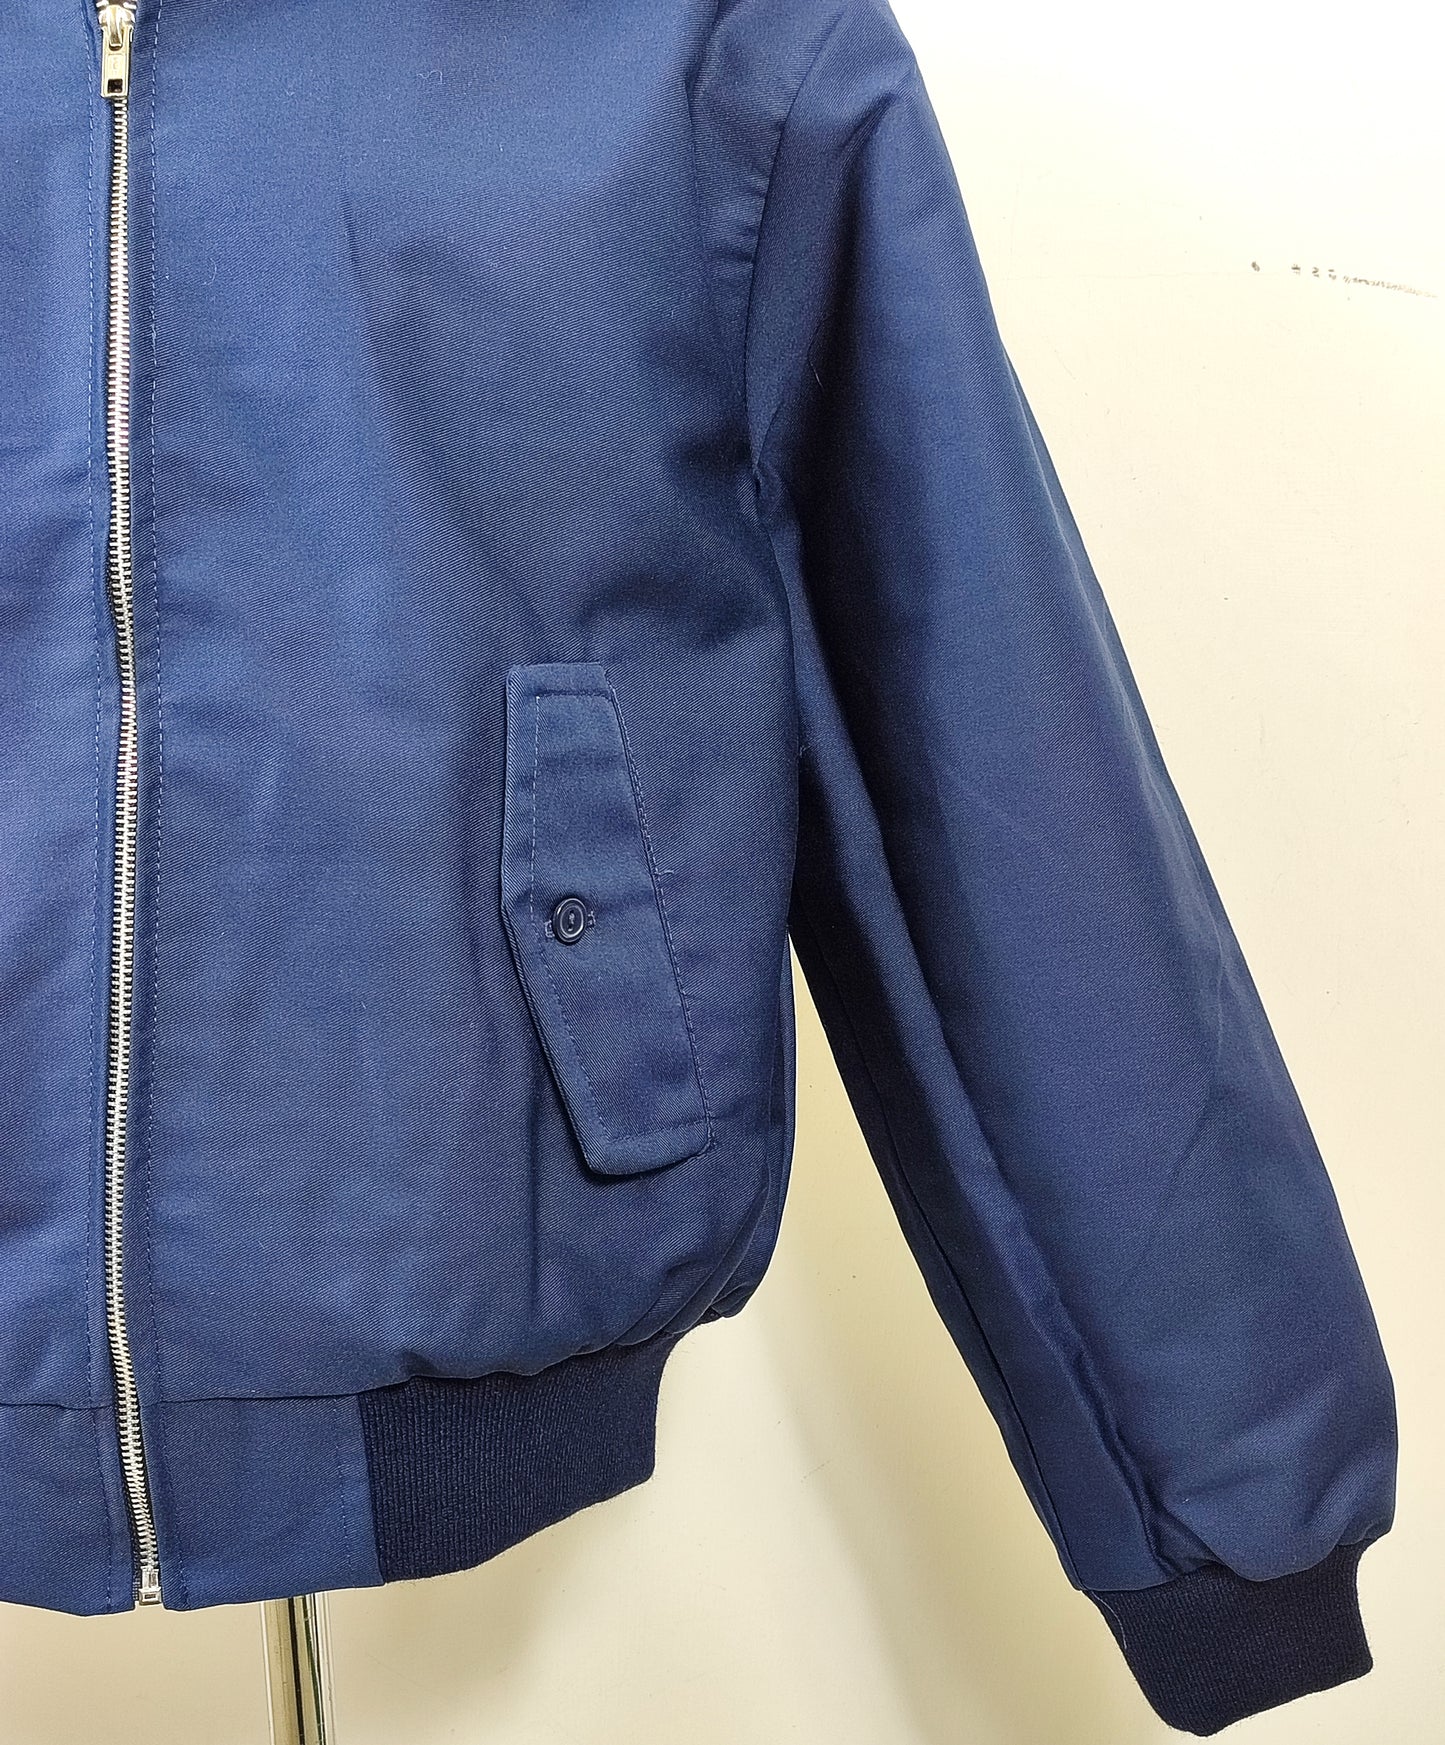 Giacca Harrington blu notte da uomo in cotone Made in England - Man Navy Harrington Jacket